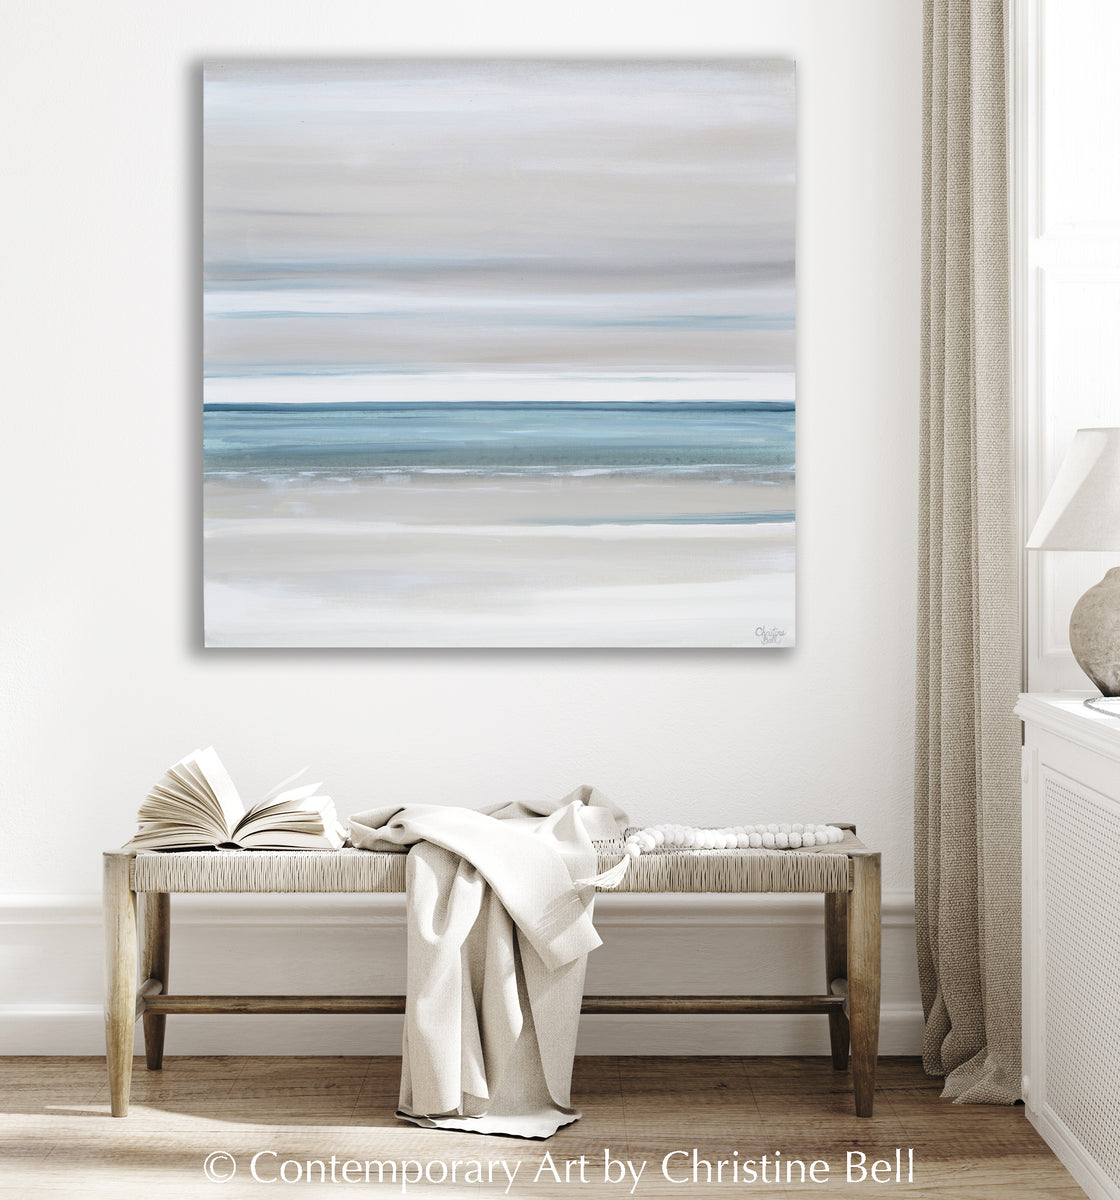 Acrylic Abstract Painting Behind Sofa, Large Original Painting on Canv –  artworkcanvas